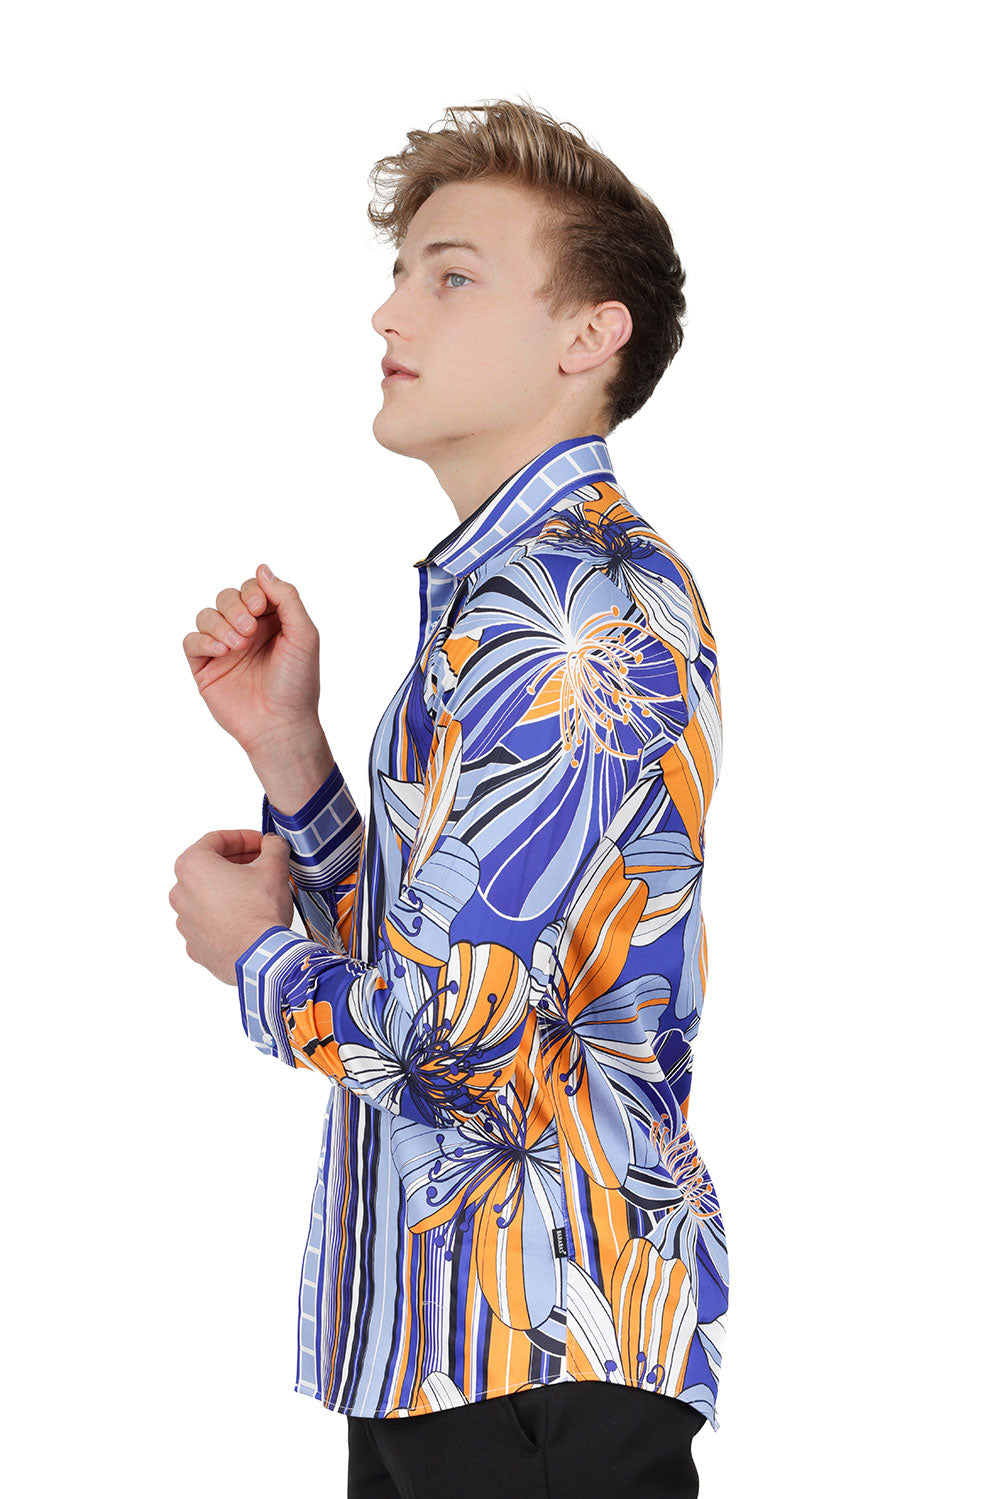 BARABAS Men's Vibrant Floral Print Button Down Long Sleeves Shirt SP08 Blue